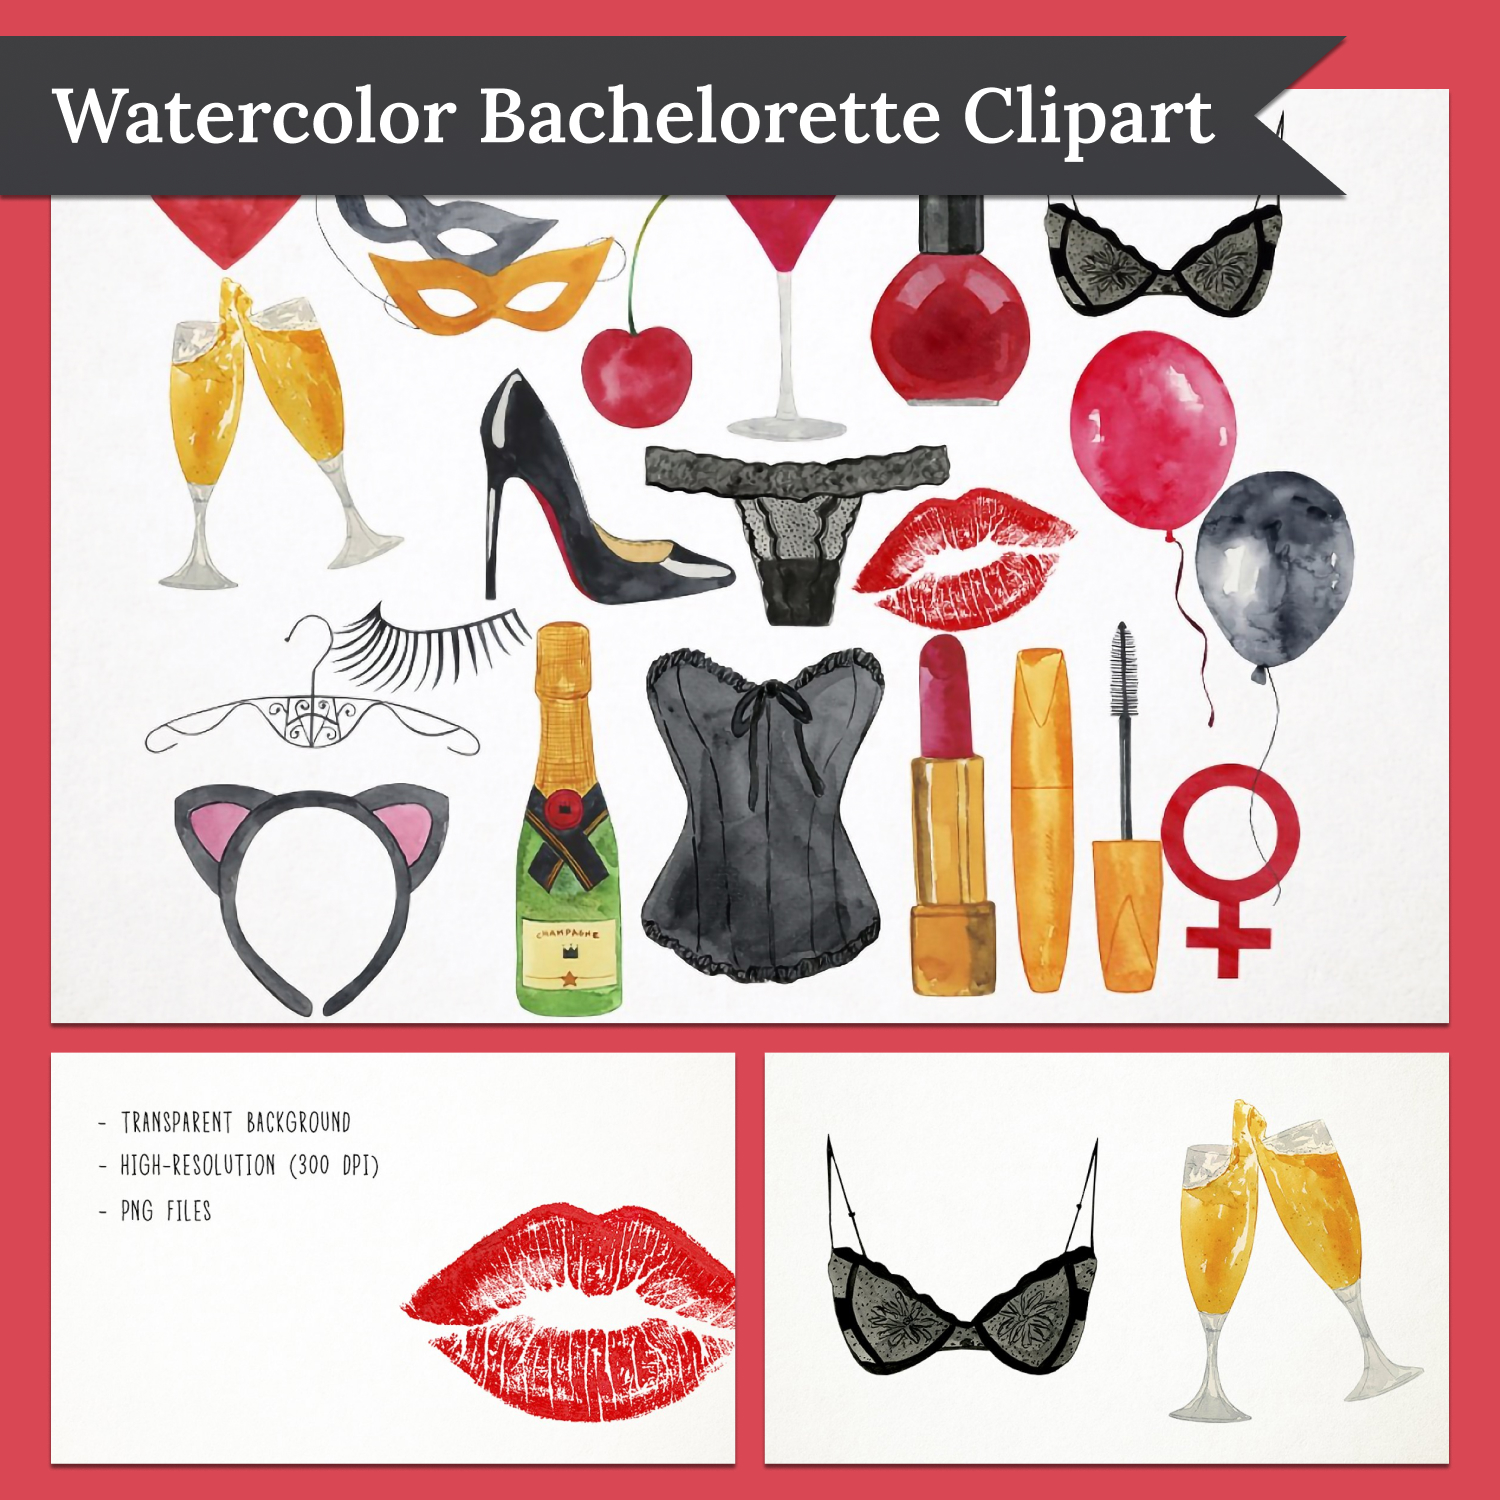 Watercolor bachelorette clipart preview.